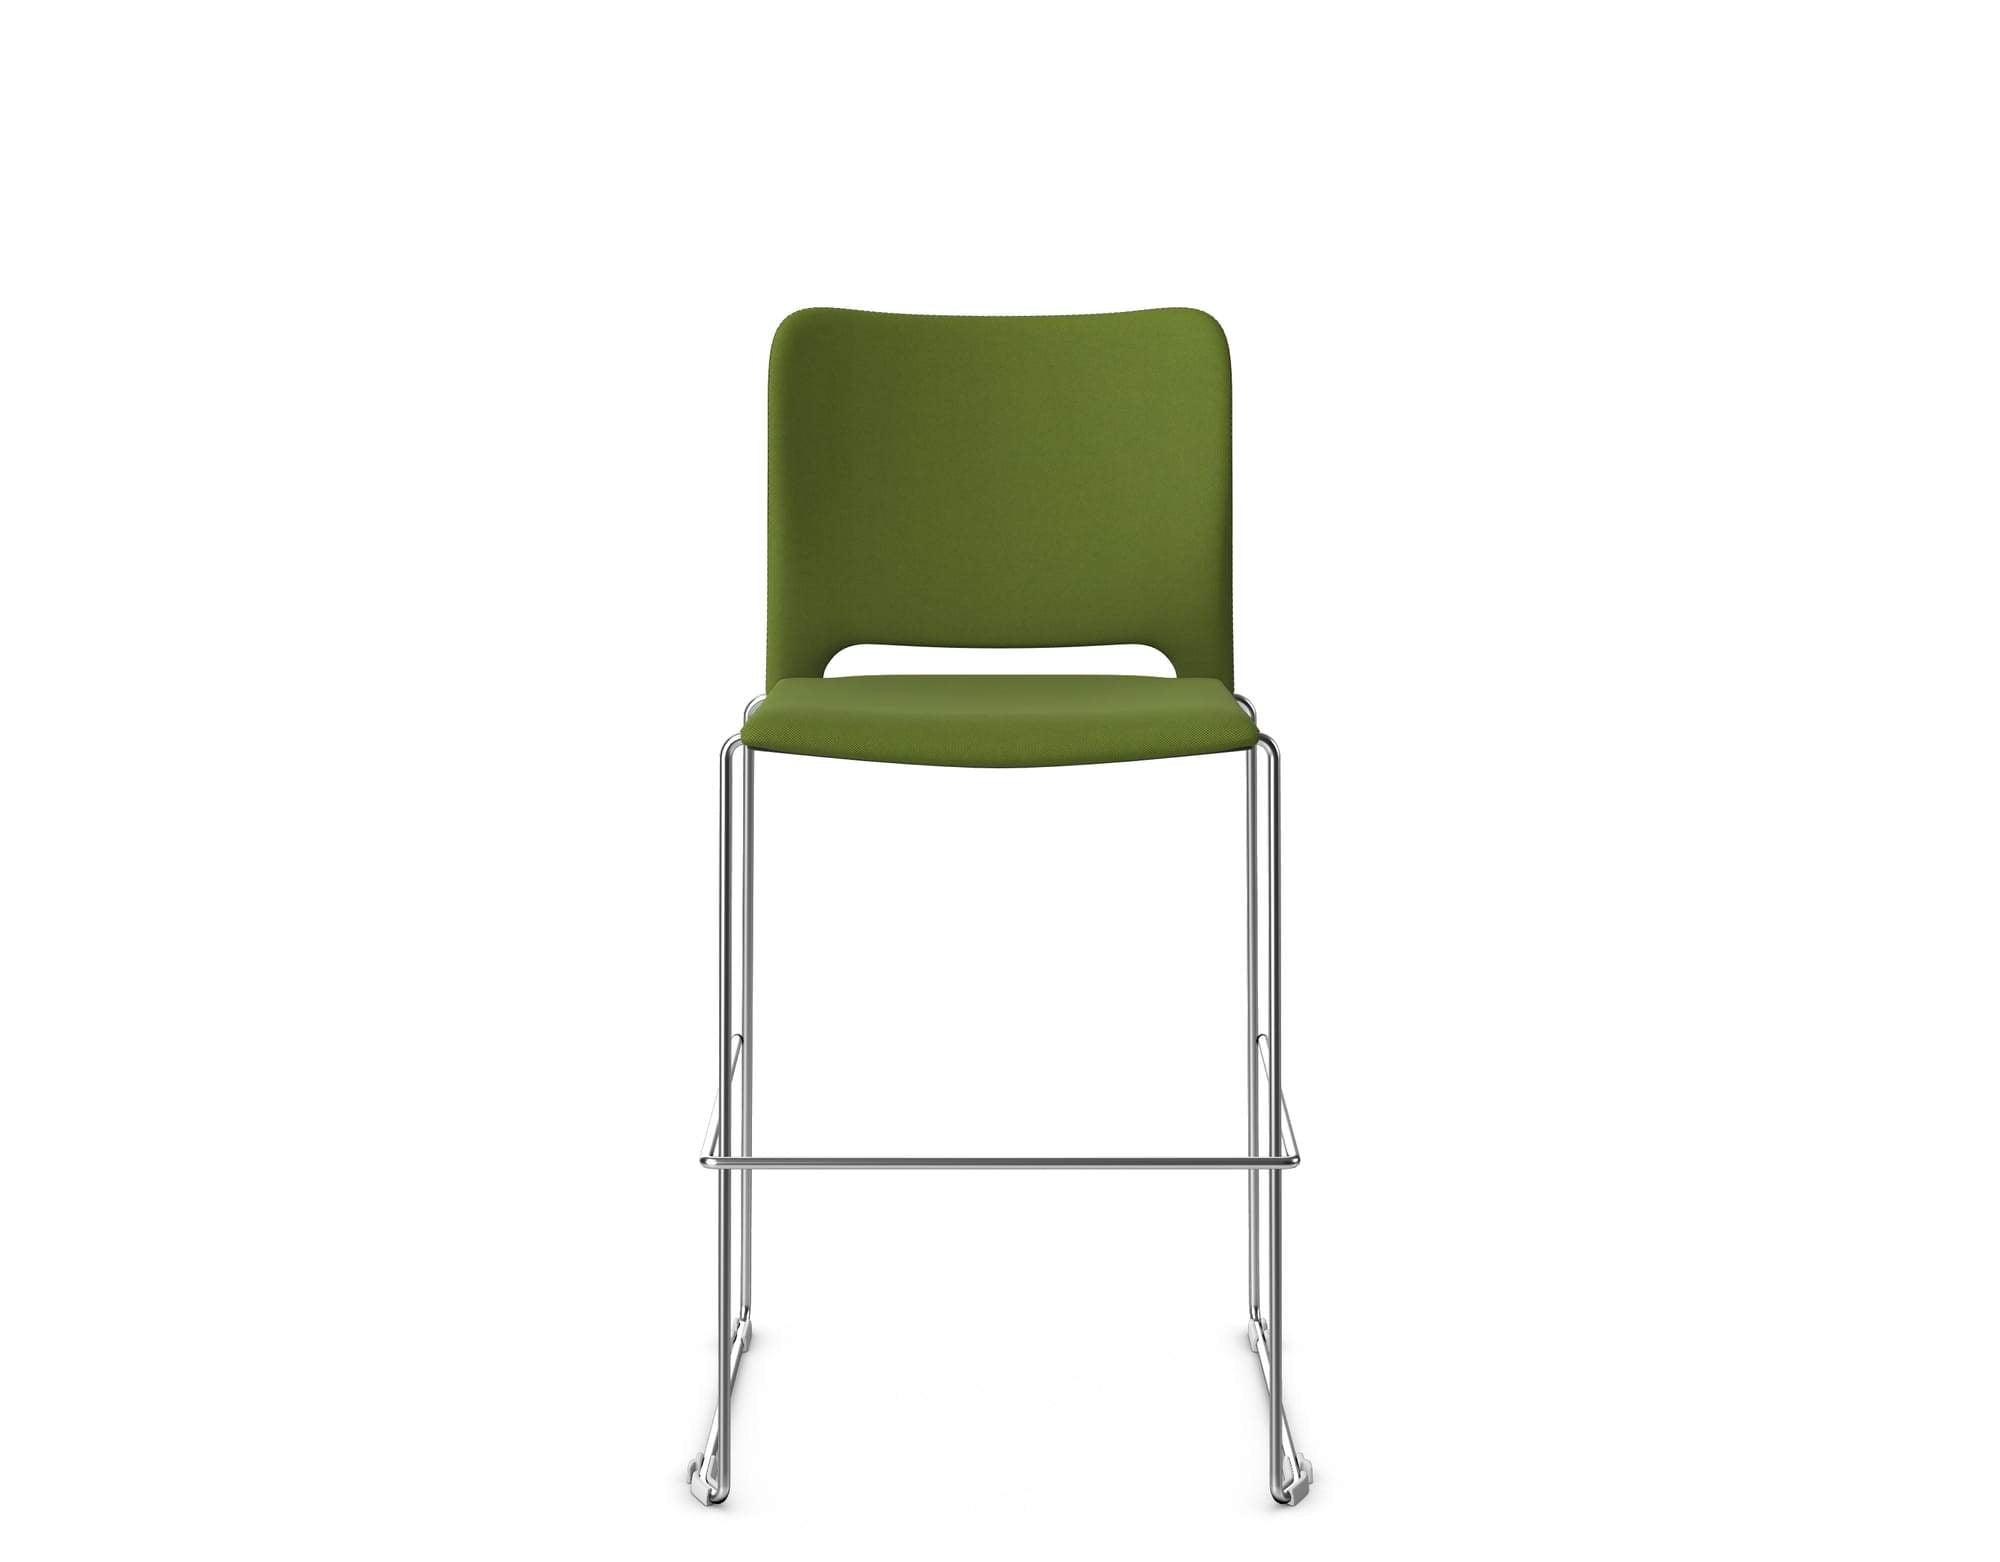 KB-ONDA-TT stool